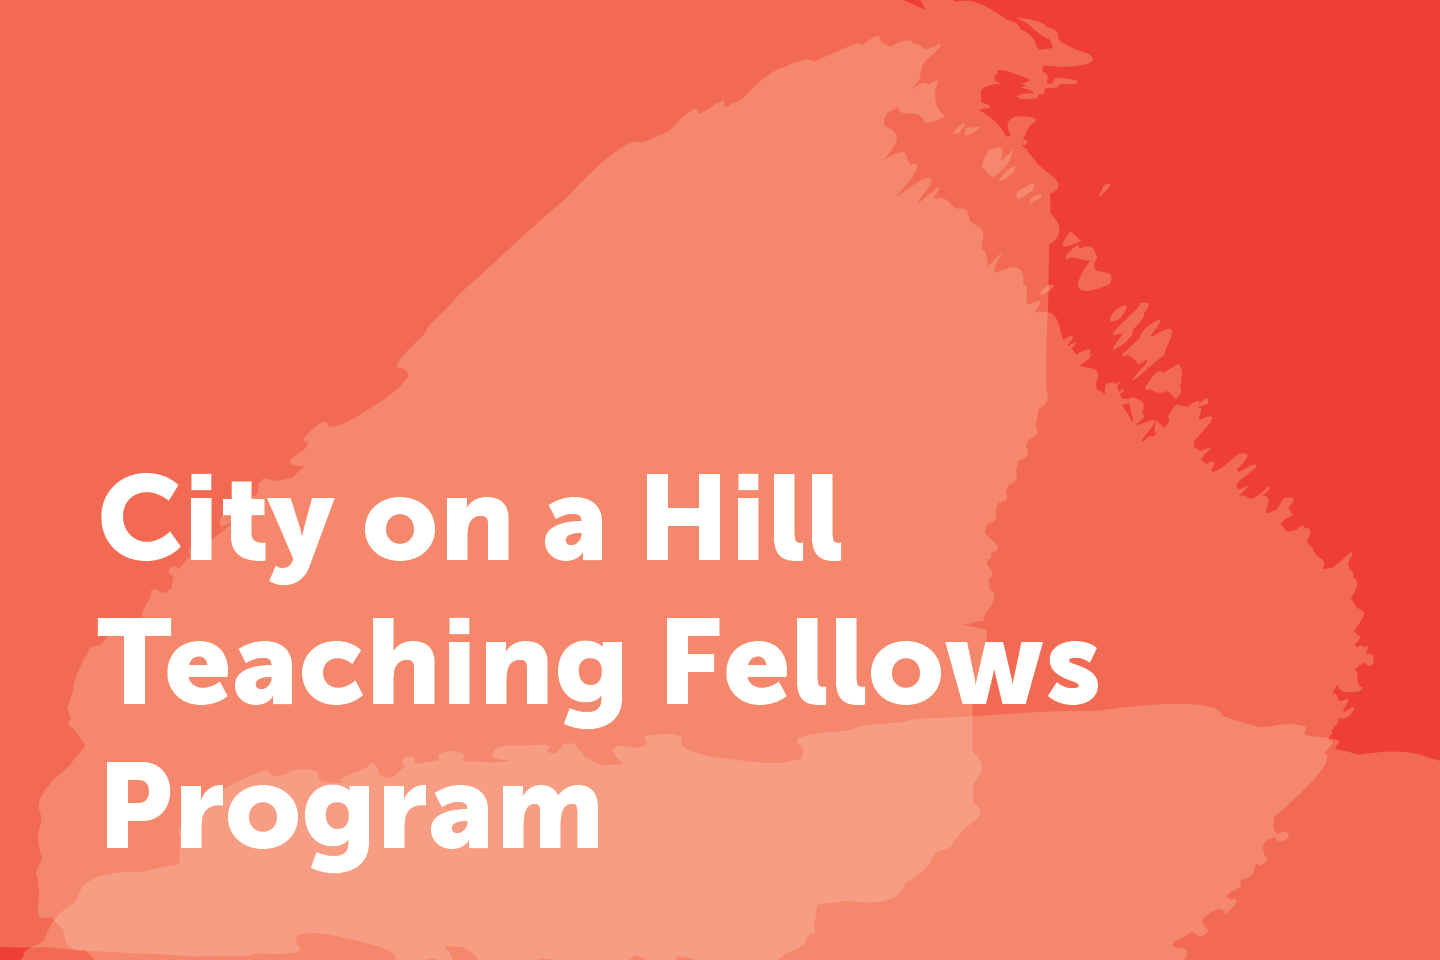 City on a Hill Teaching Fellows Program